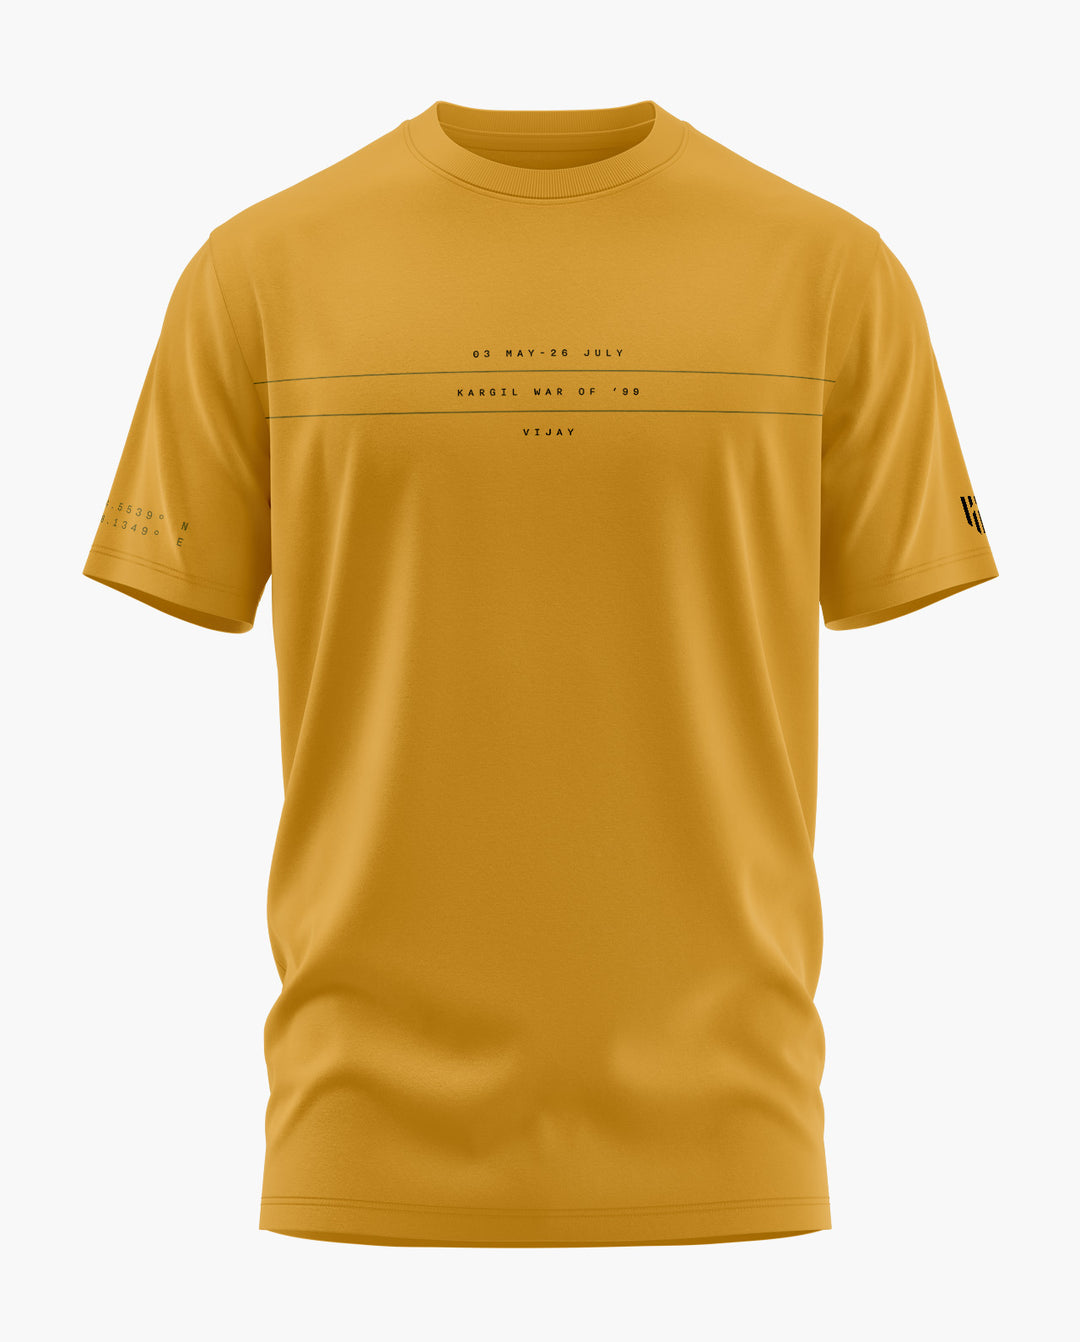 BATTLE STRIPE T-Shirt